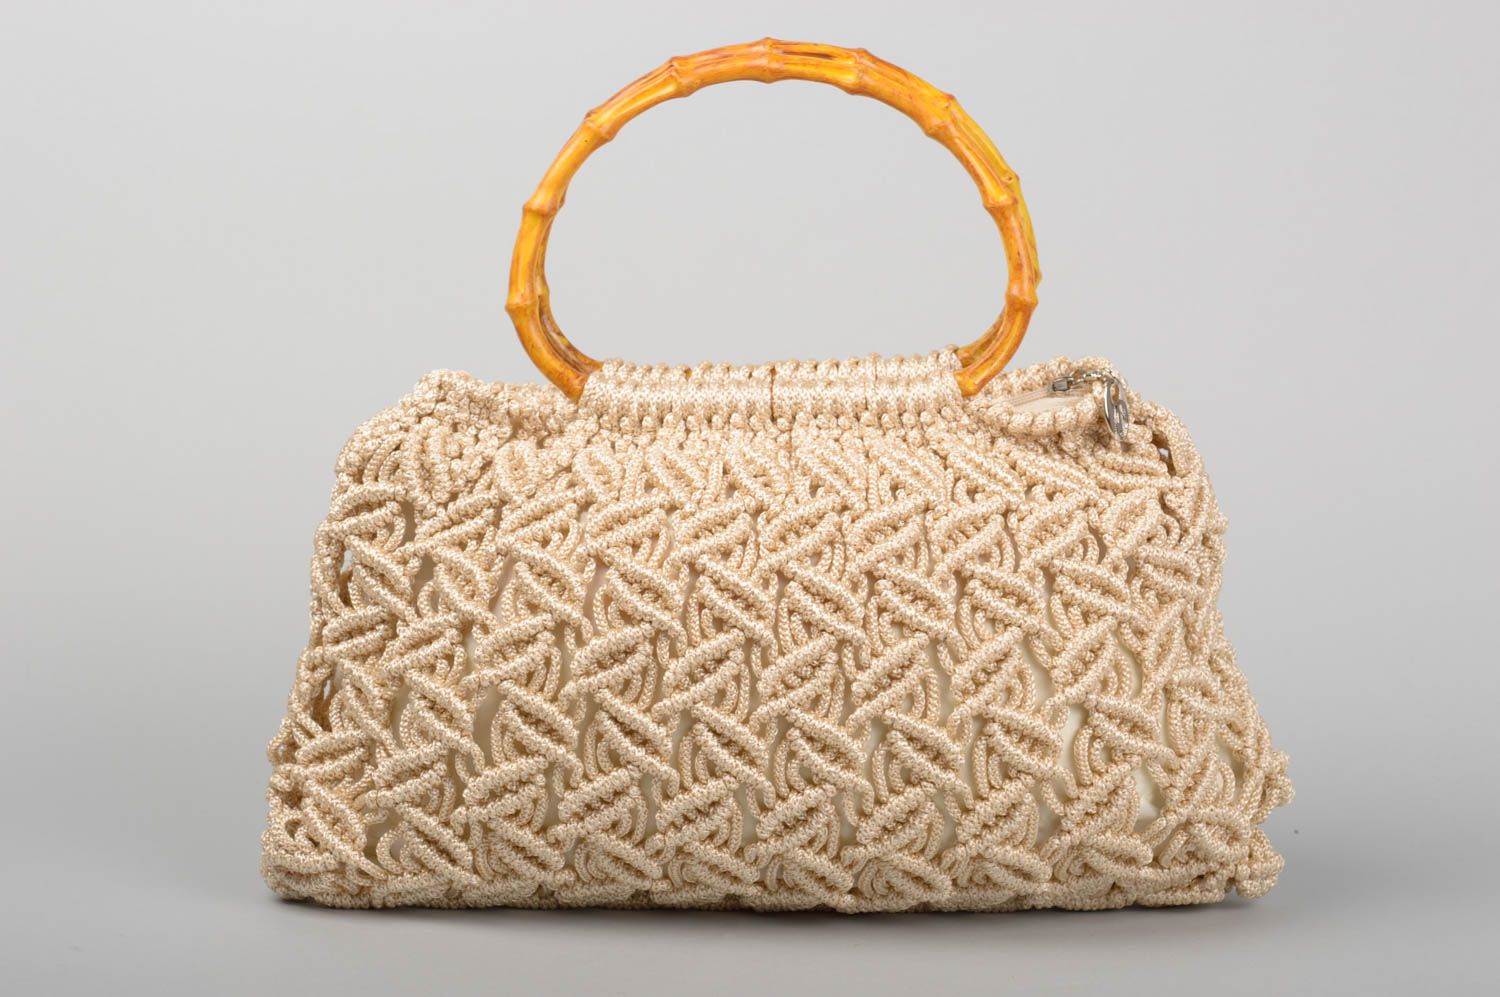 Macrame bag handmade bag ladies bags designer handbags best gifts for girls photo 1